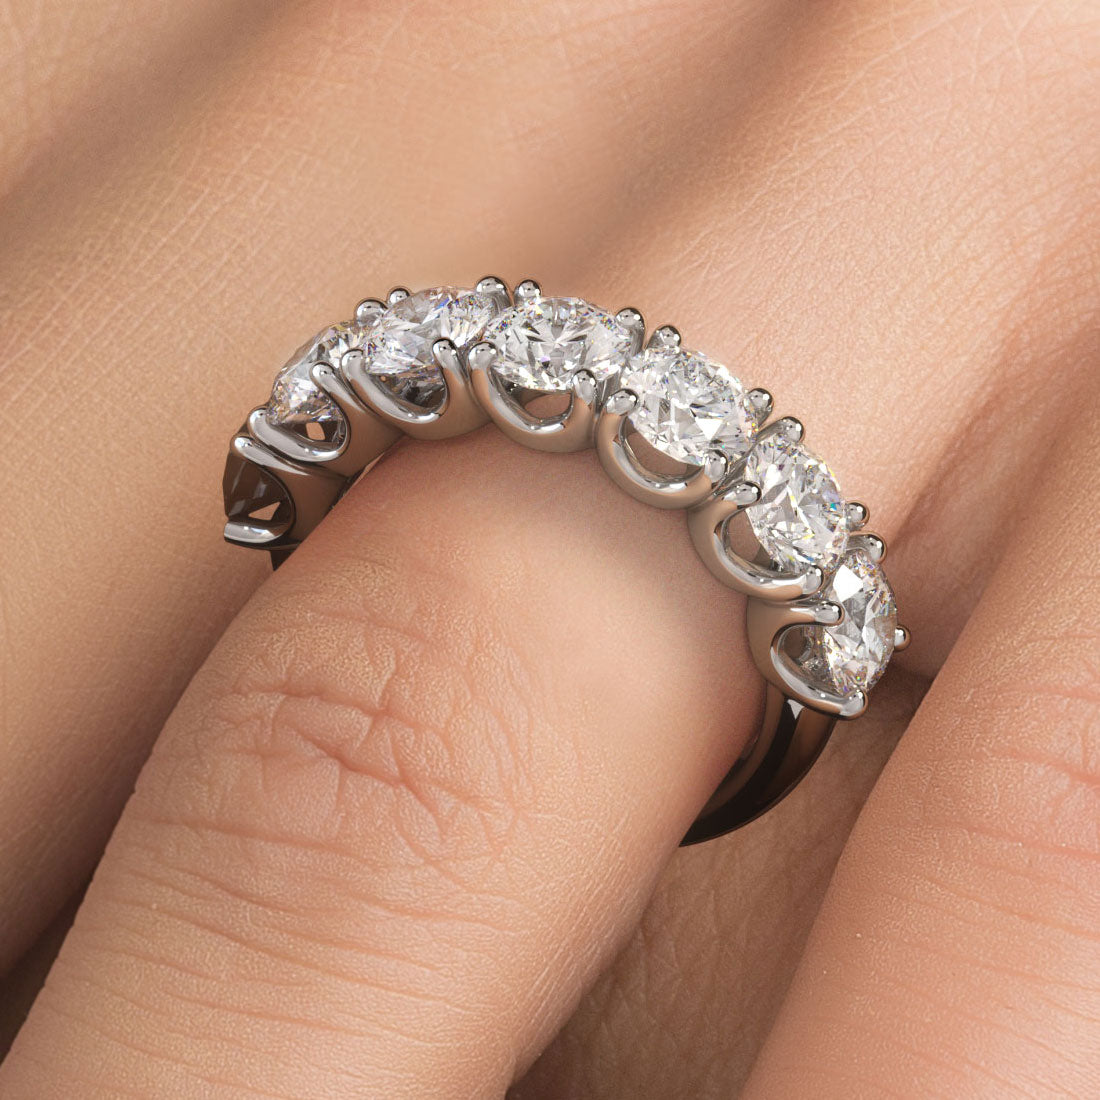 Shop Carol 7 Stone Diamond Ring Online at Best Price